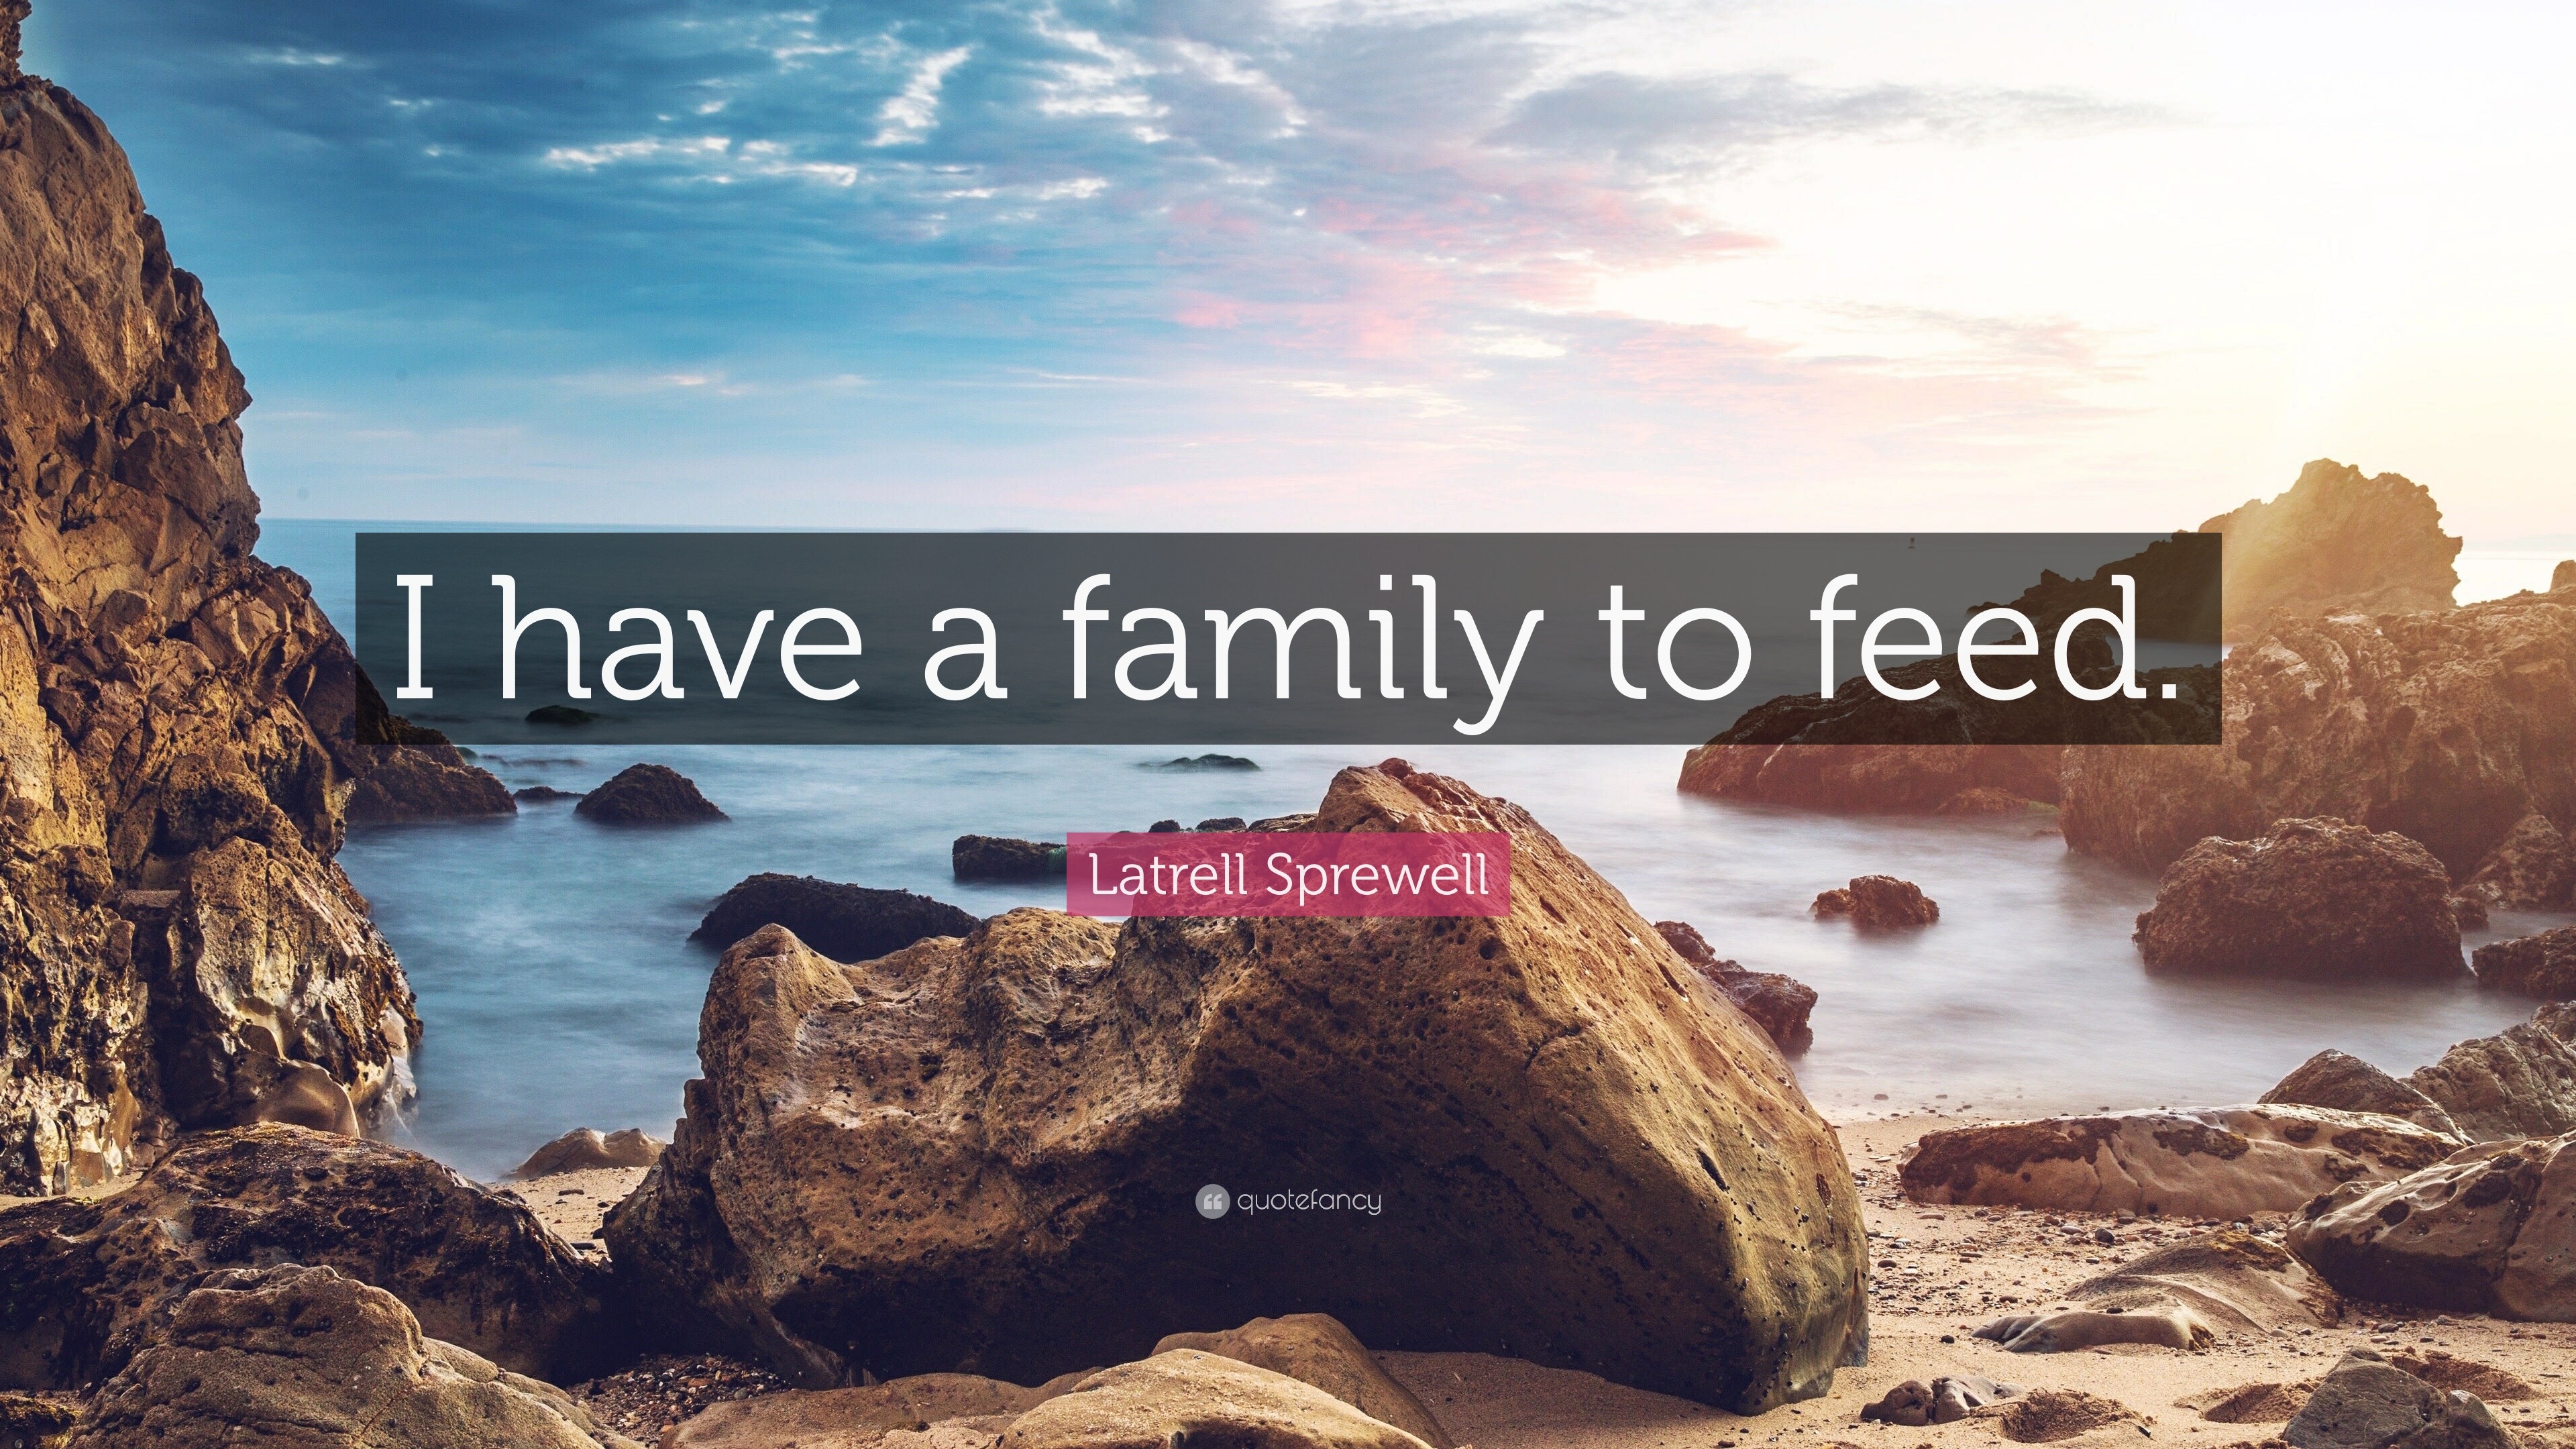 latrell sprewell family